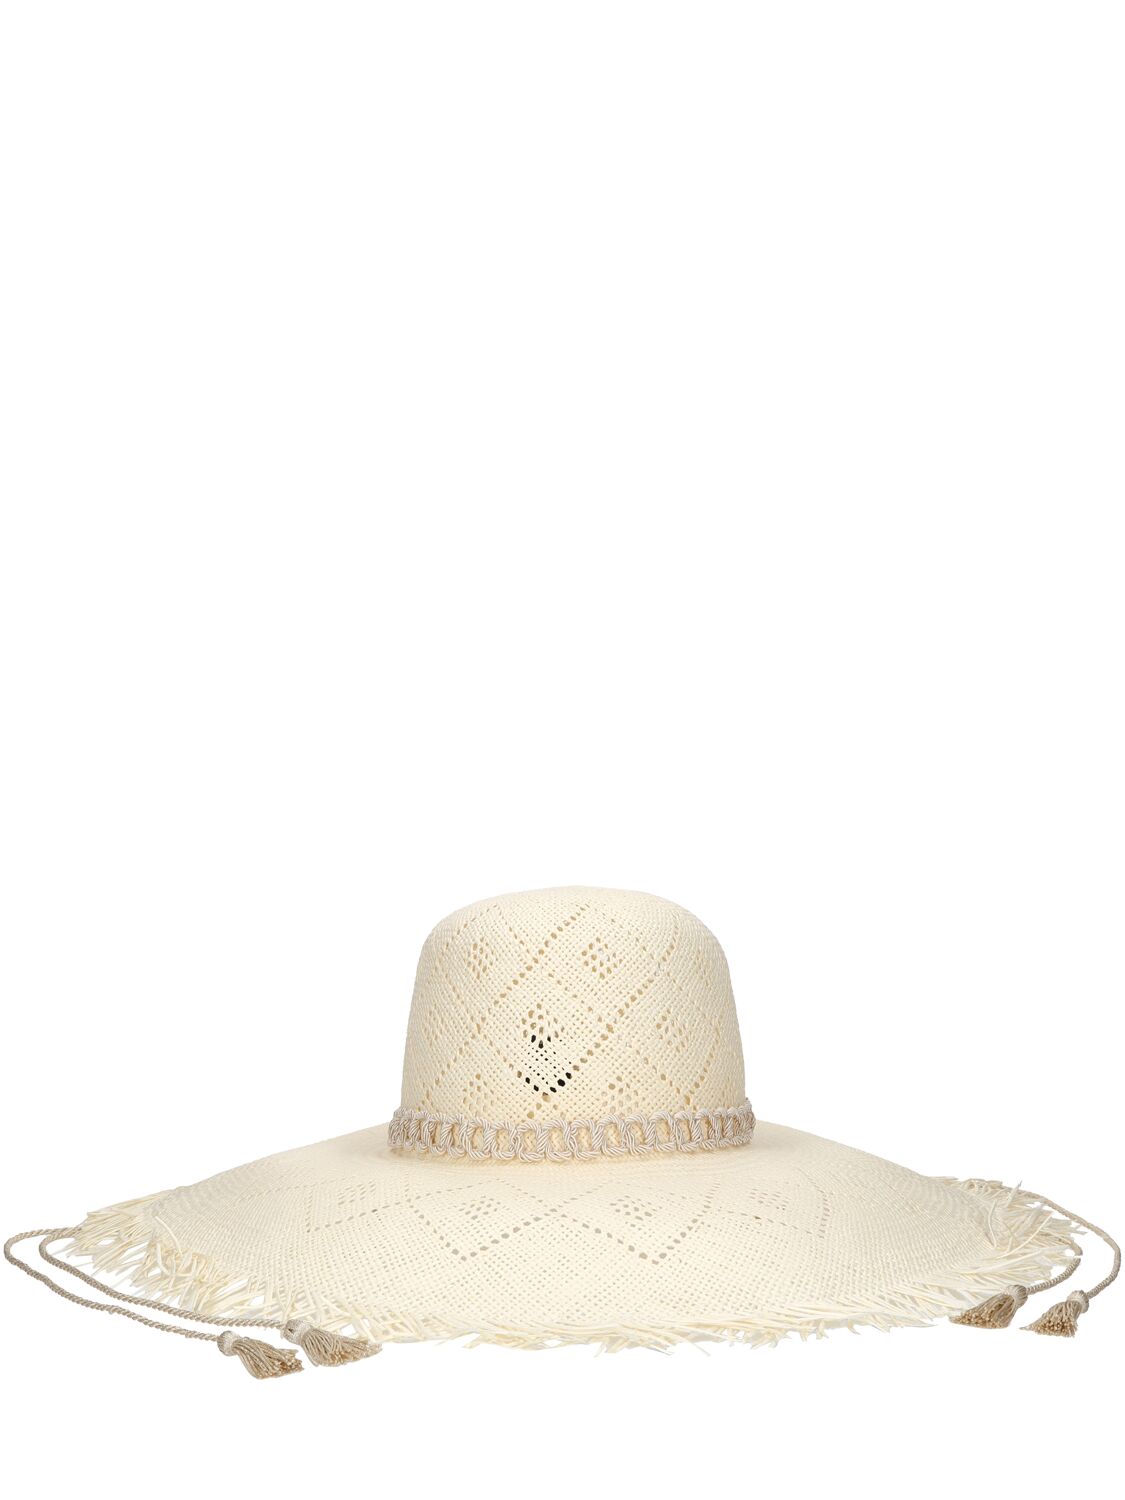 Borsalino Violet Straw Hat In White